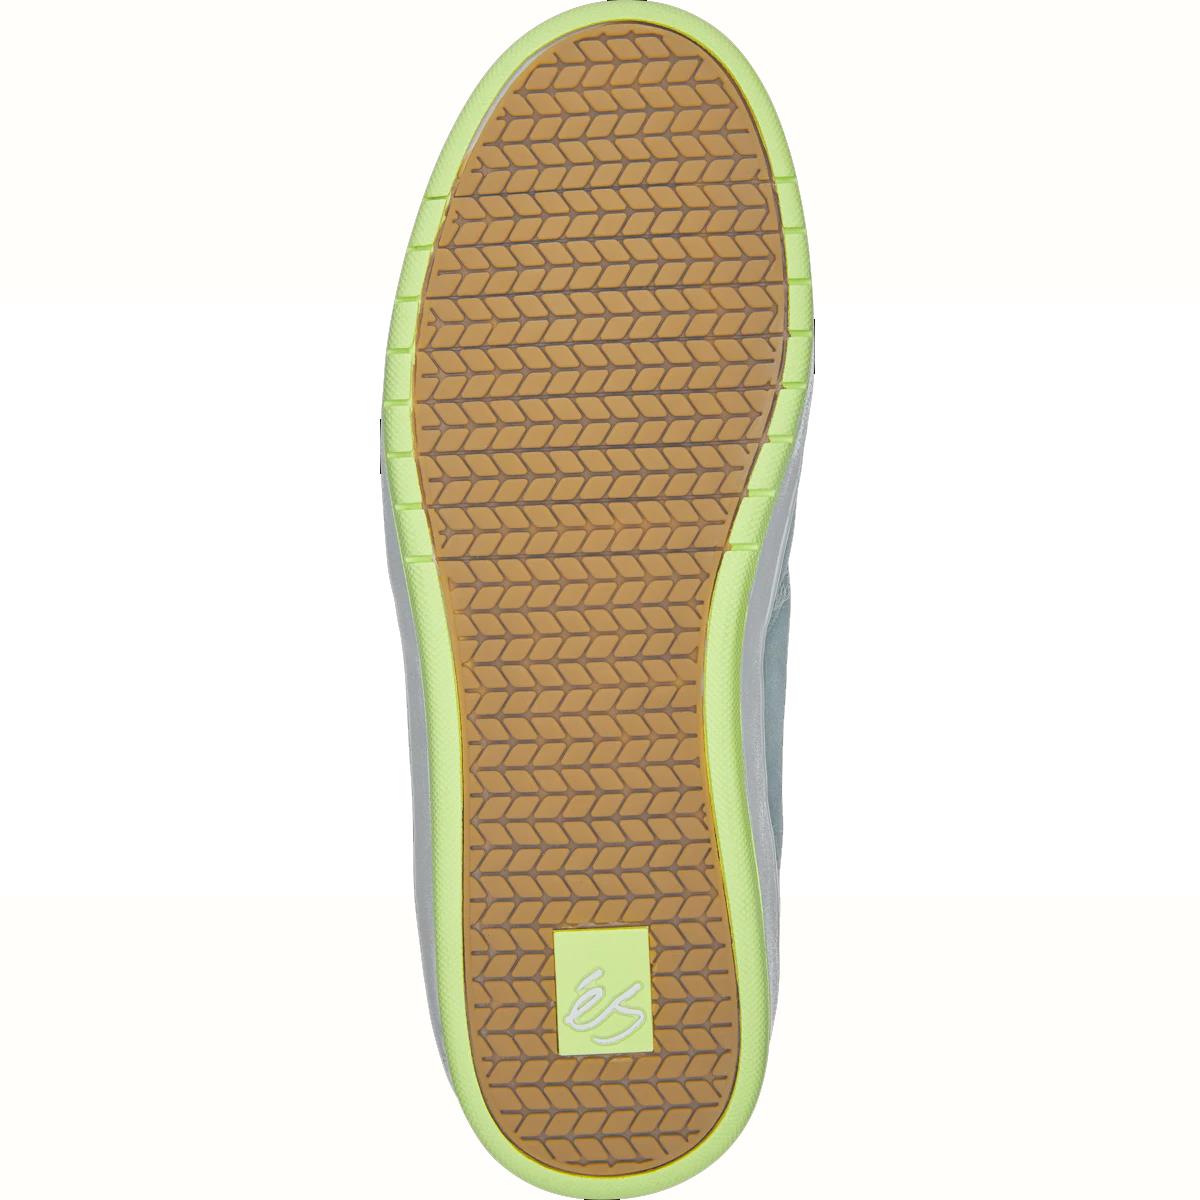 E's Accel Slim Mid X Carlsbad  Blue Grey White Skate Shoes